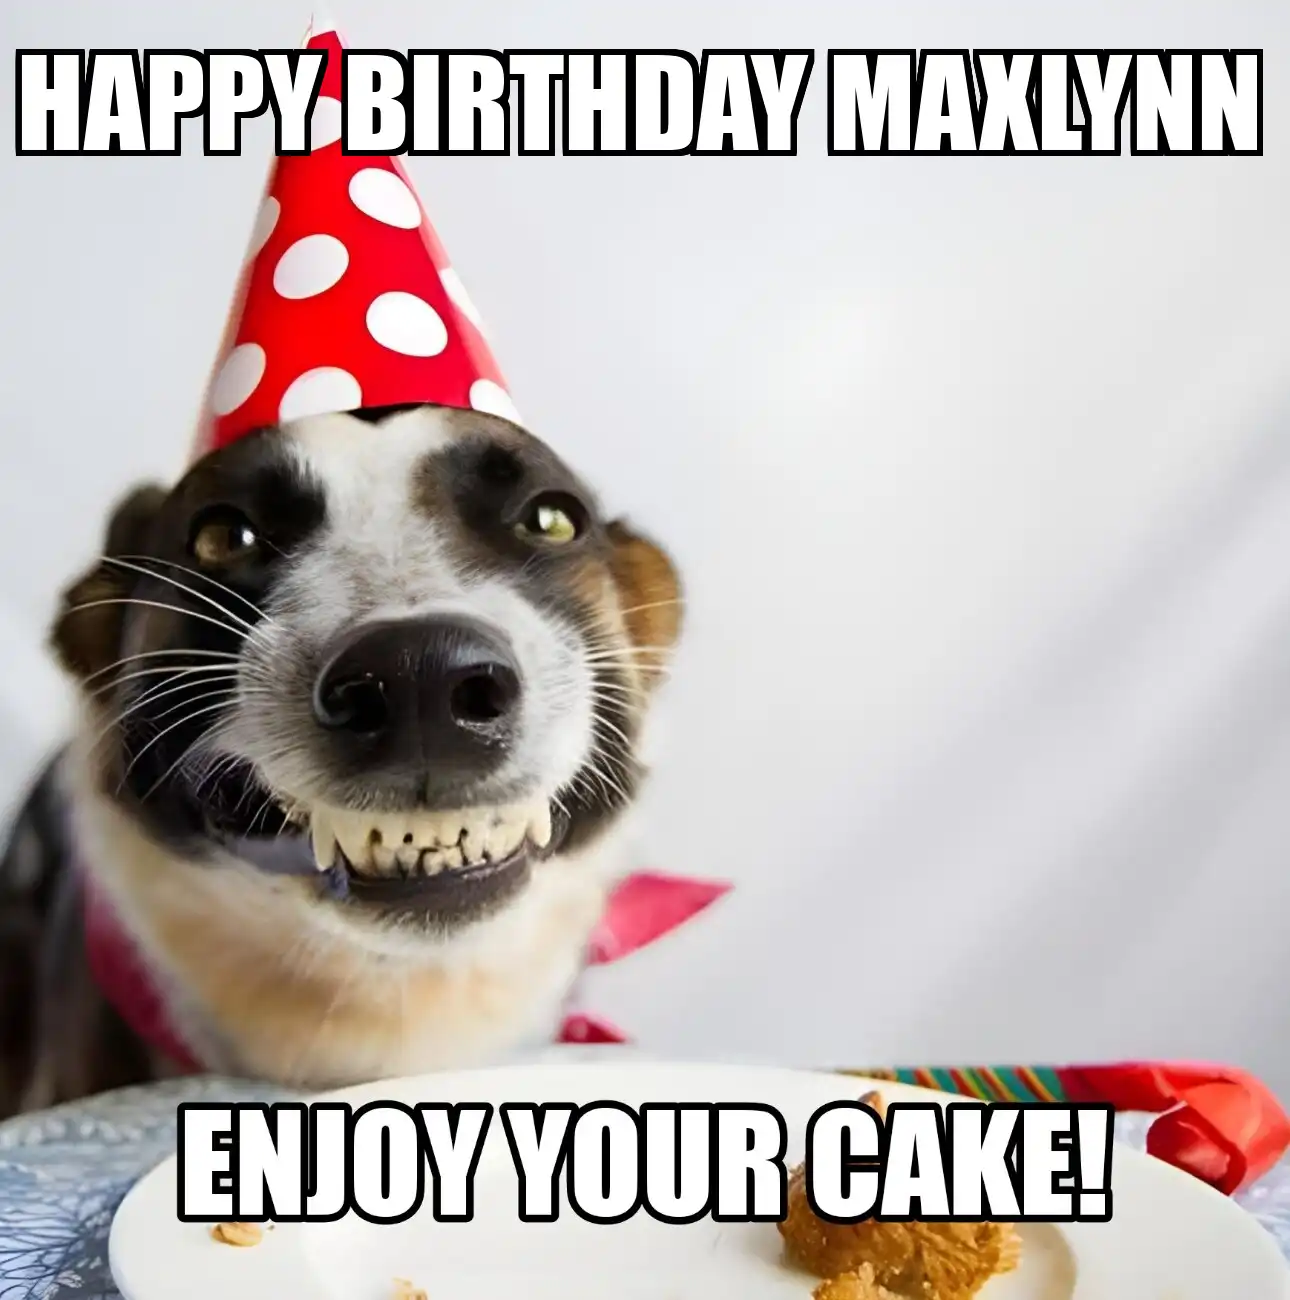 Happy Birthday Maxlynn Enjoy Your Cake Dog Meme